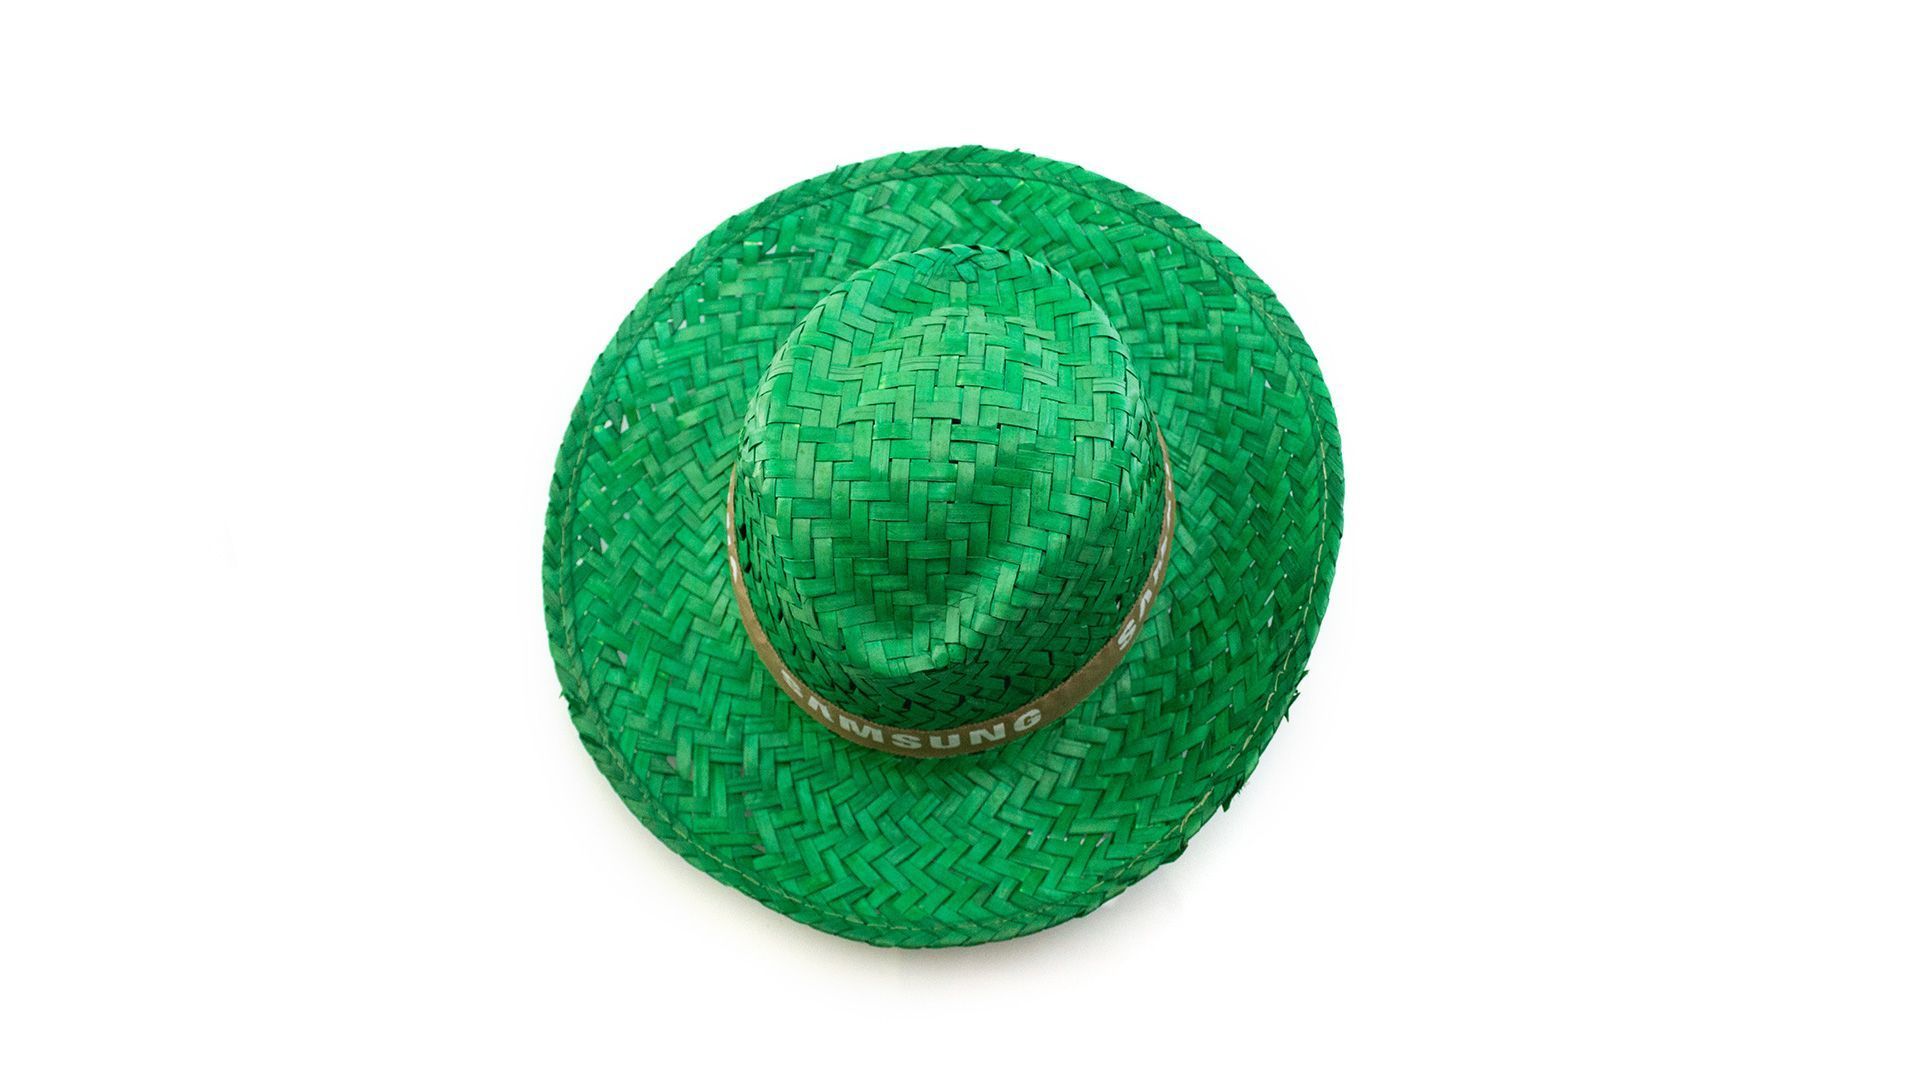 Sombrero paja verde cinta